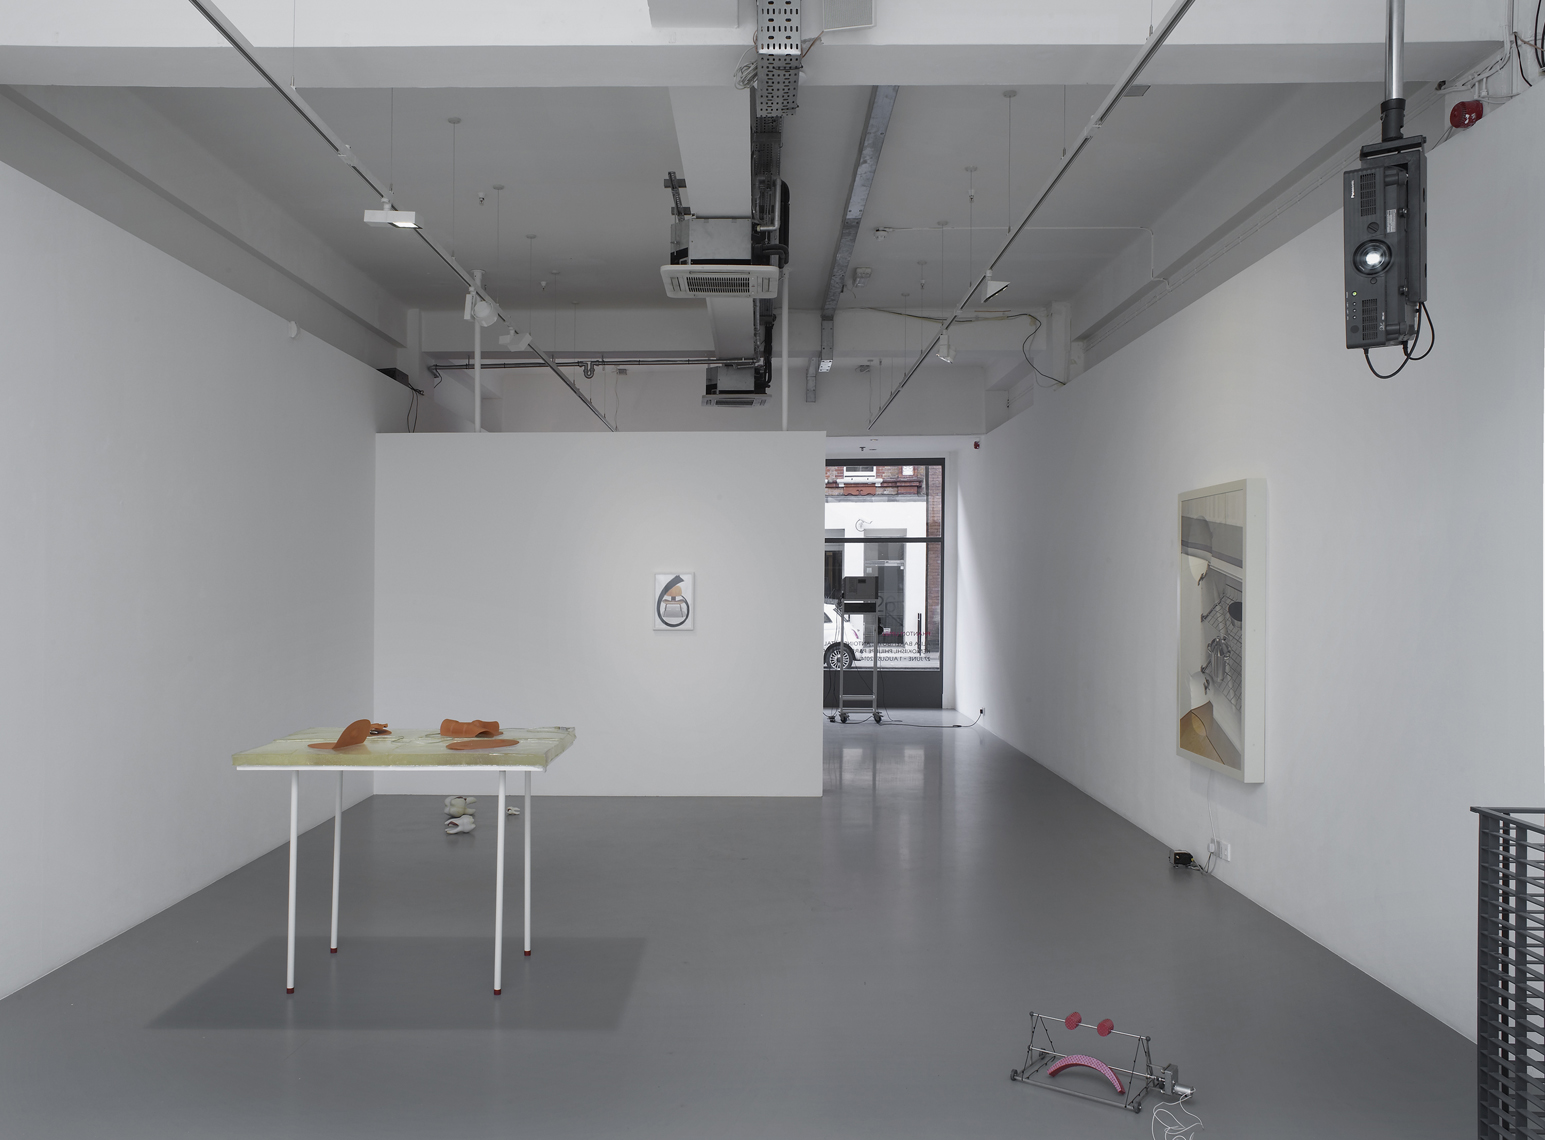 Installation shot of Phantom Limbs, 2014 at Pilar Corrias, London